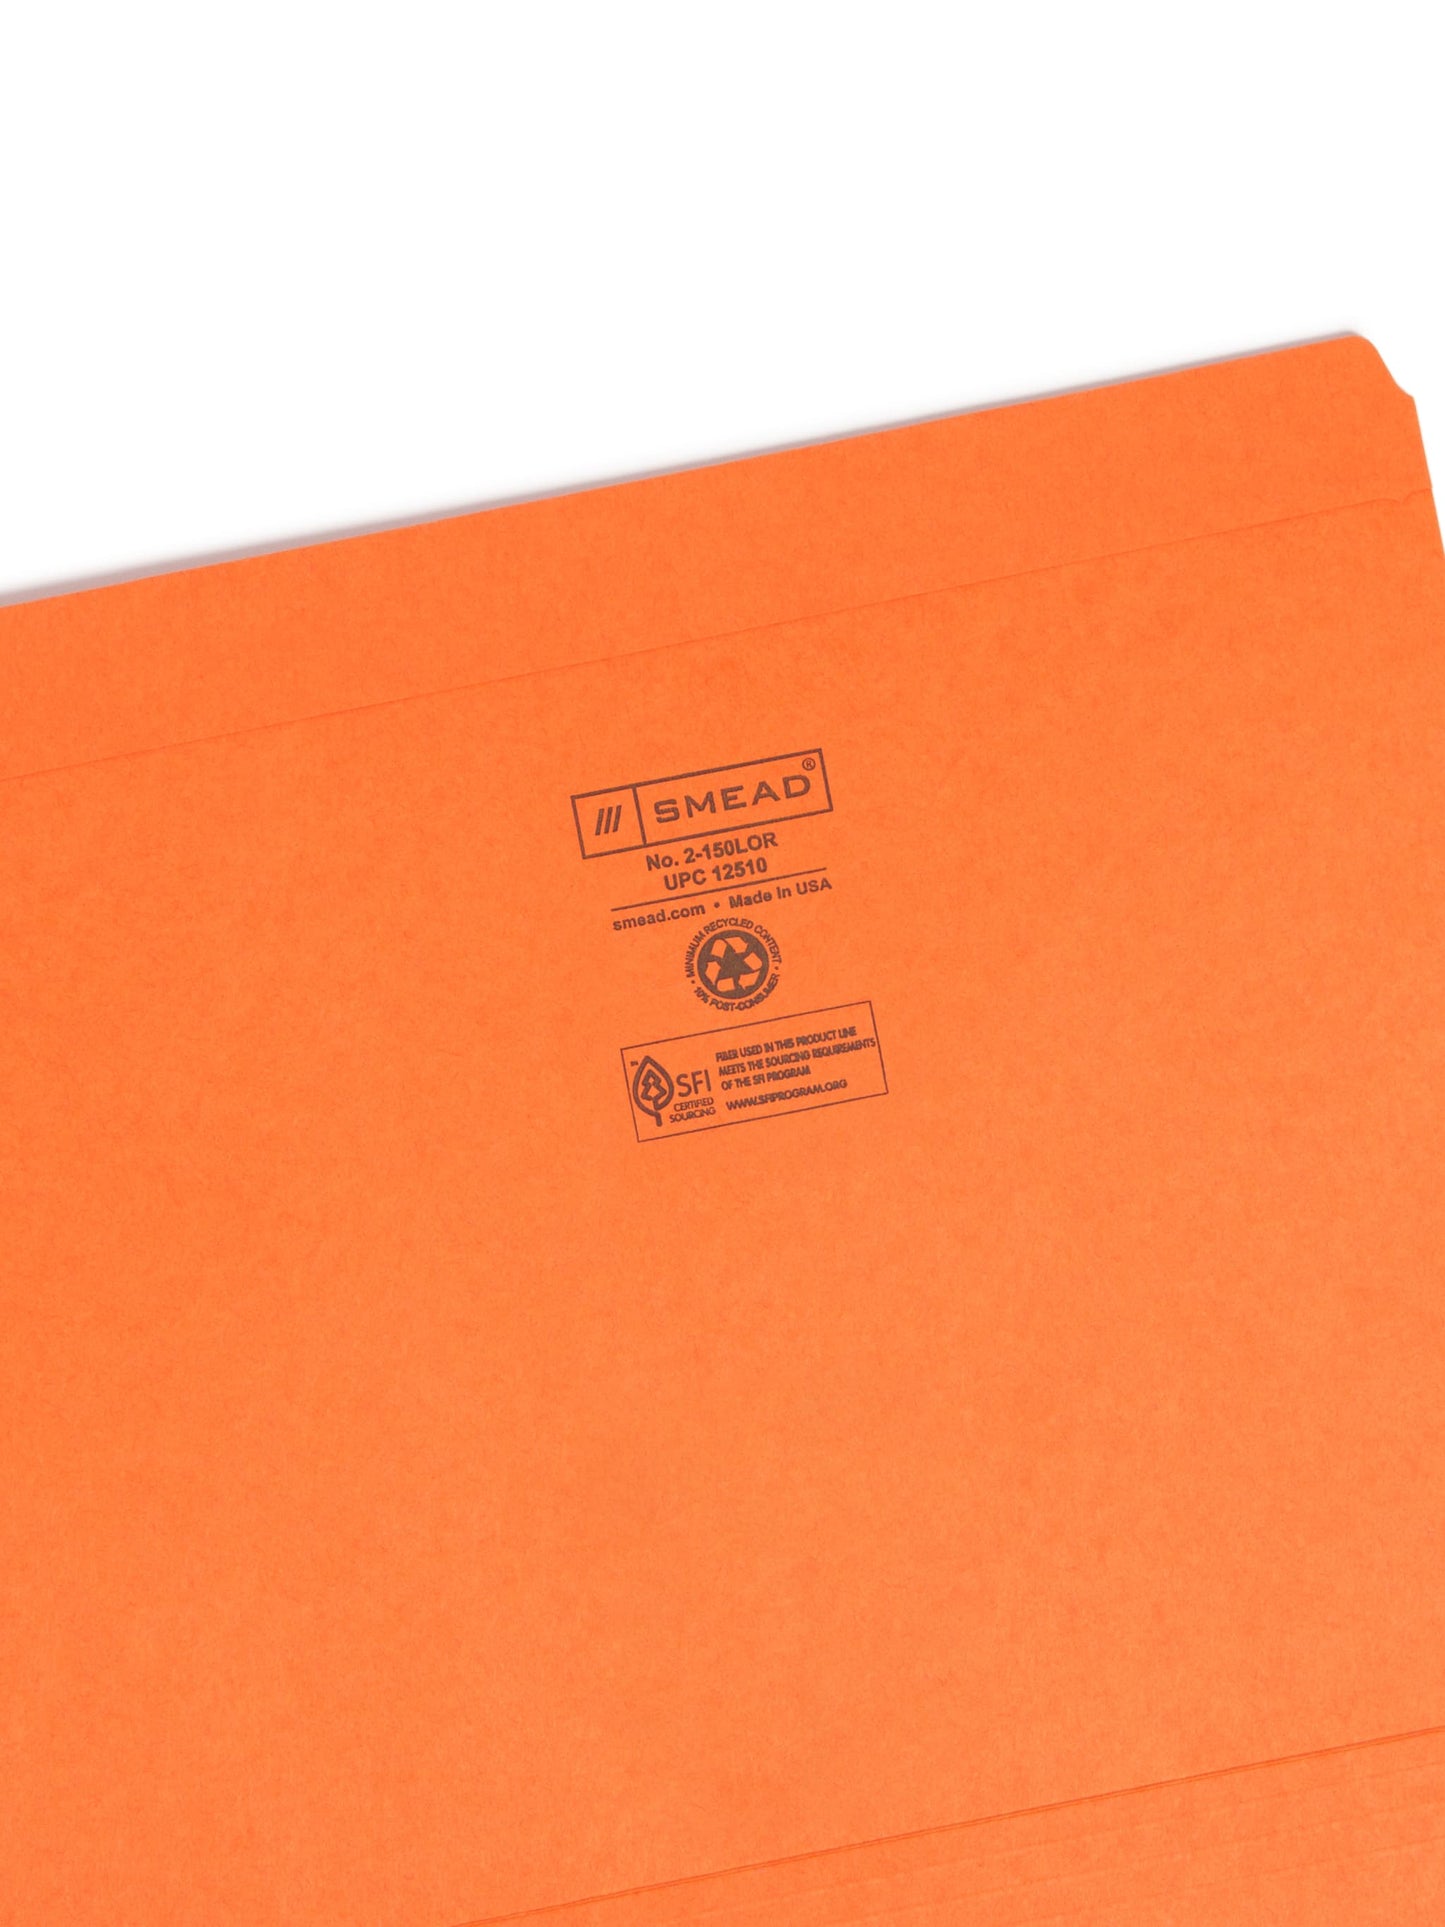 Reinforced Tab File Folders, Straight-Cut Tab, Orange Color, Letter Size, Set of 100, 086486125109